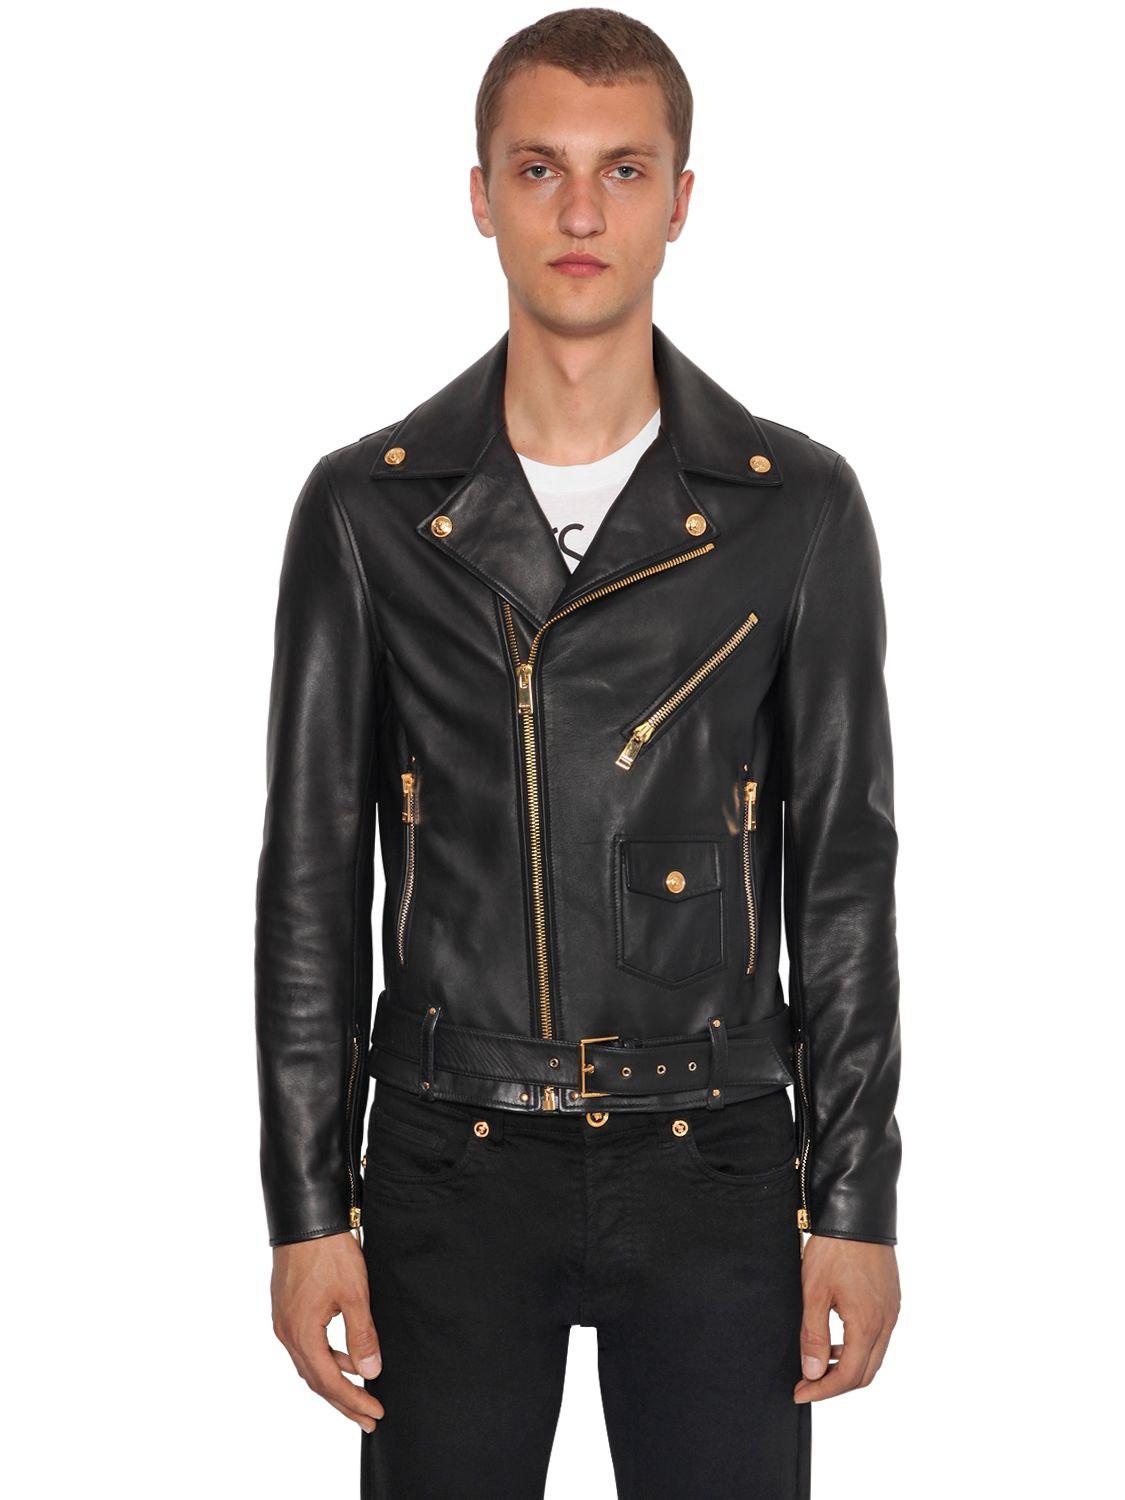 Versace Leather Jacket Mens Sale | medialit.org